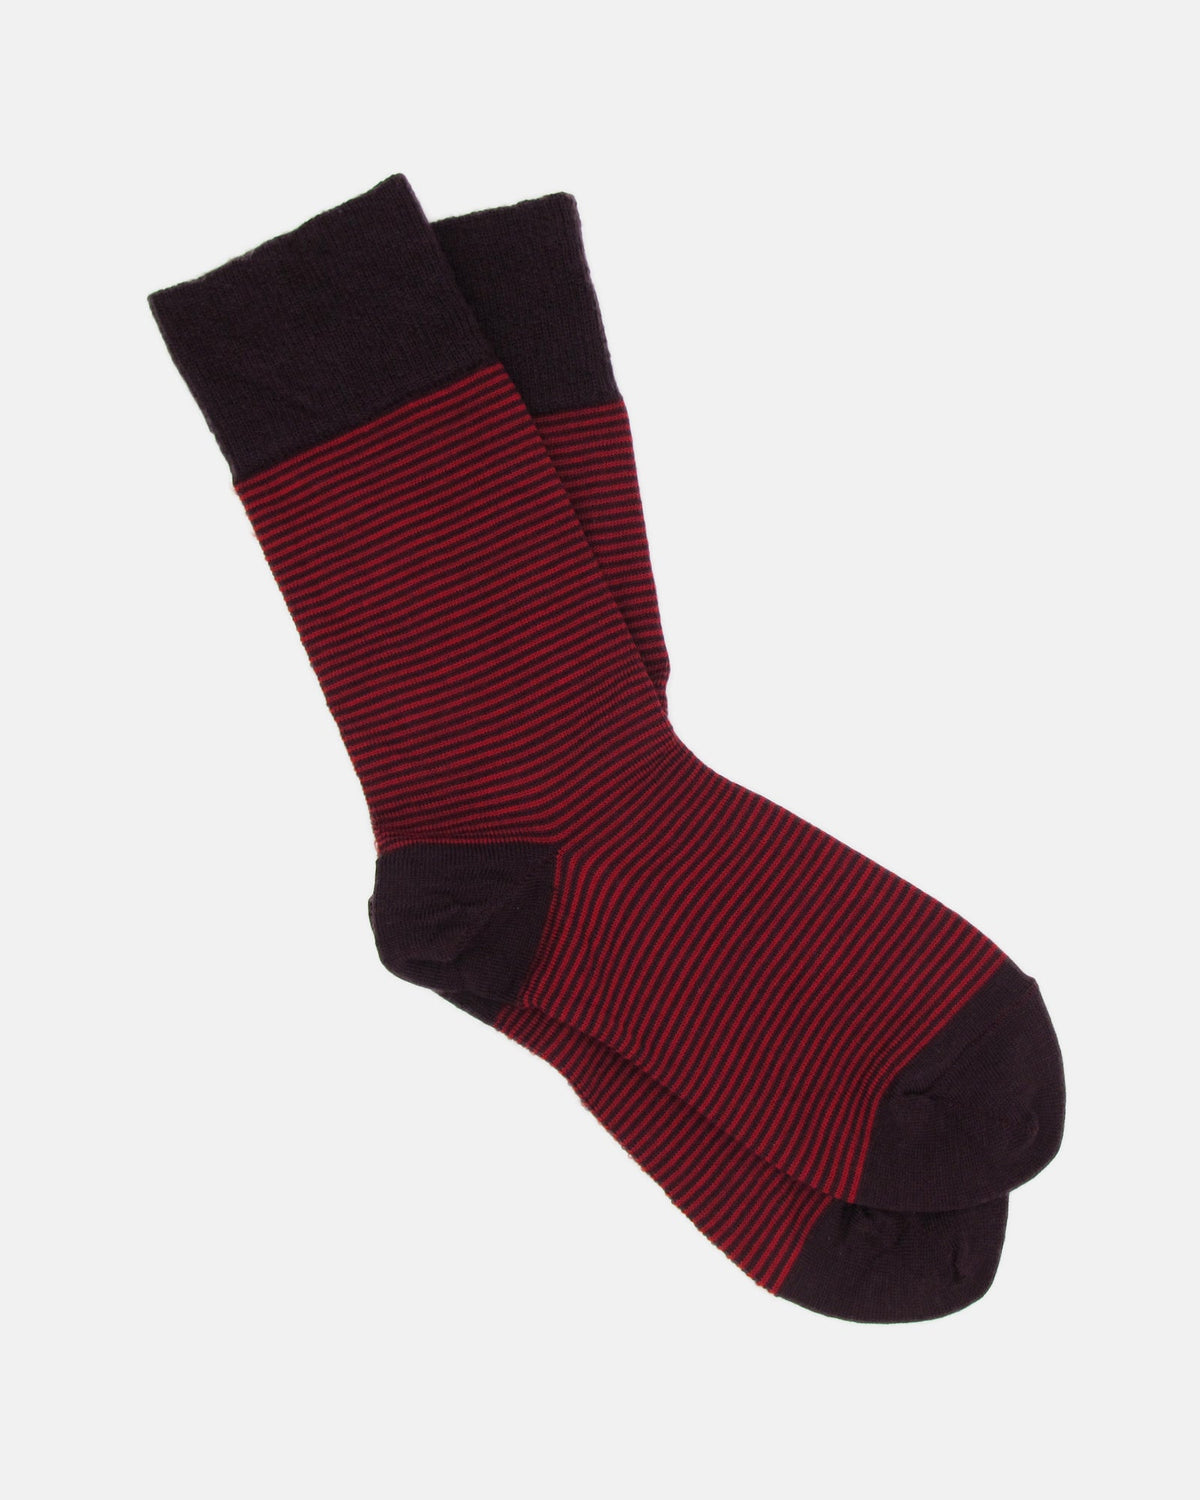 Pencil Stripe Wool Socks - Aubergine/Red - BRIT LOCKER